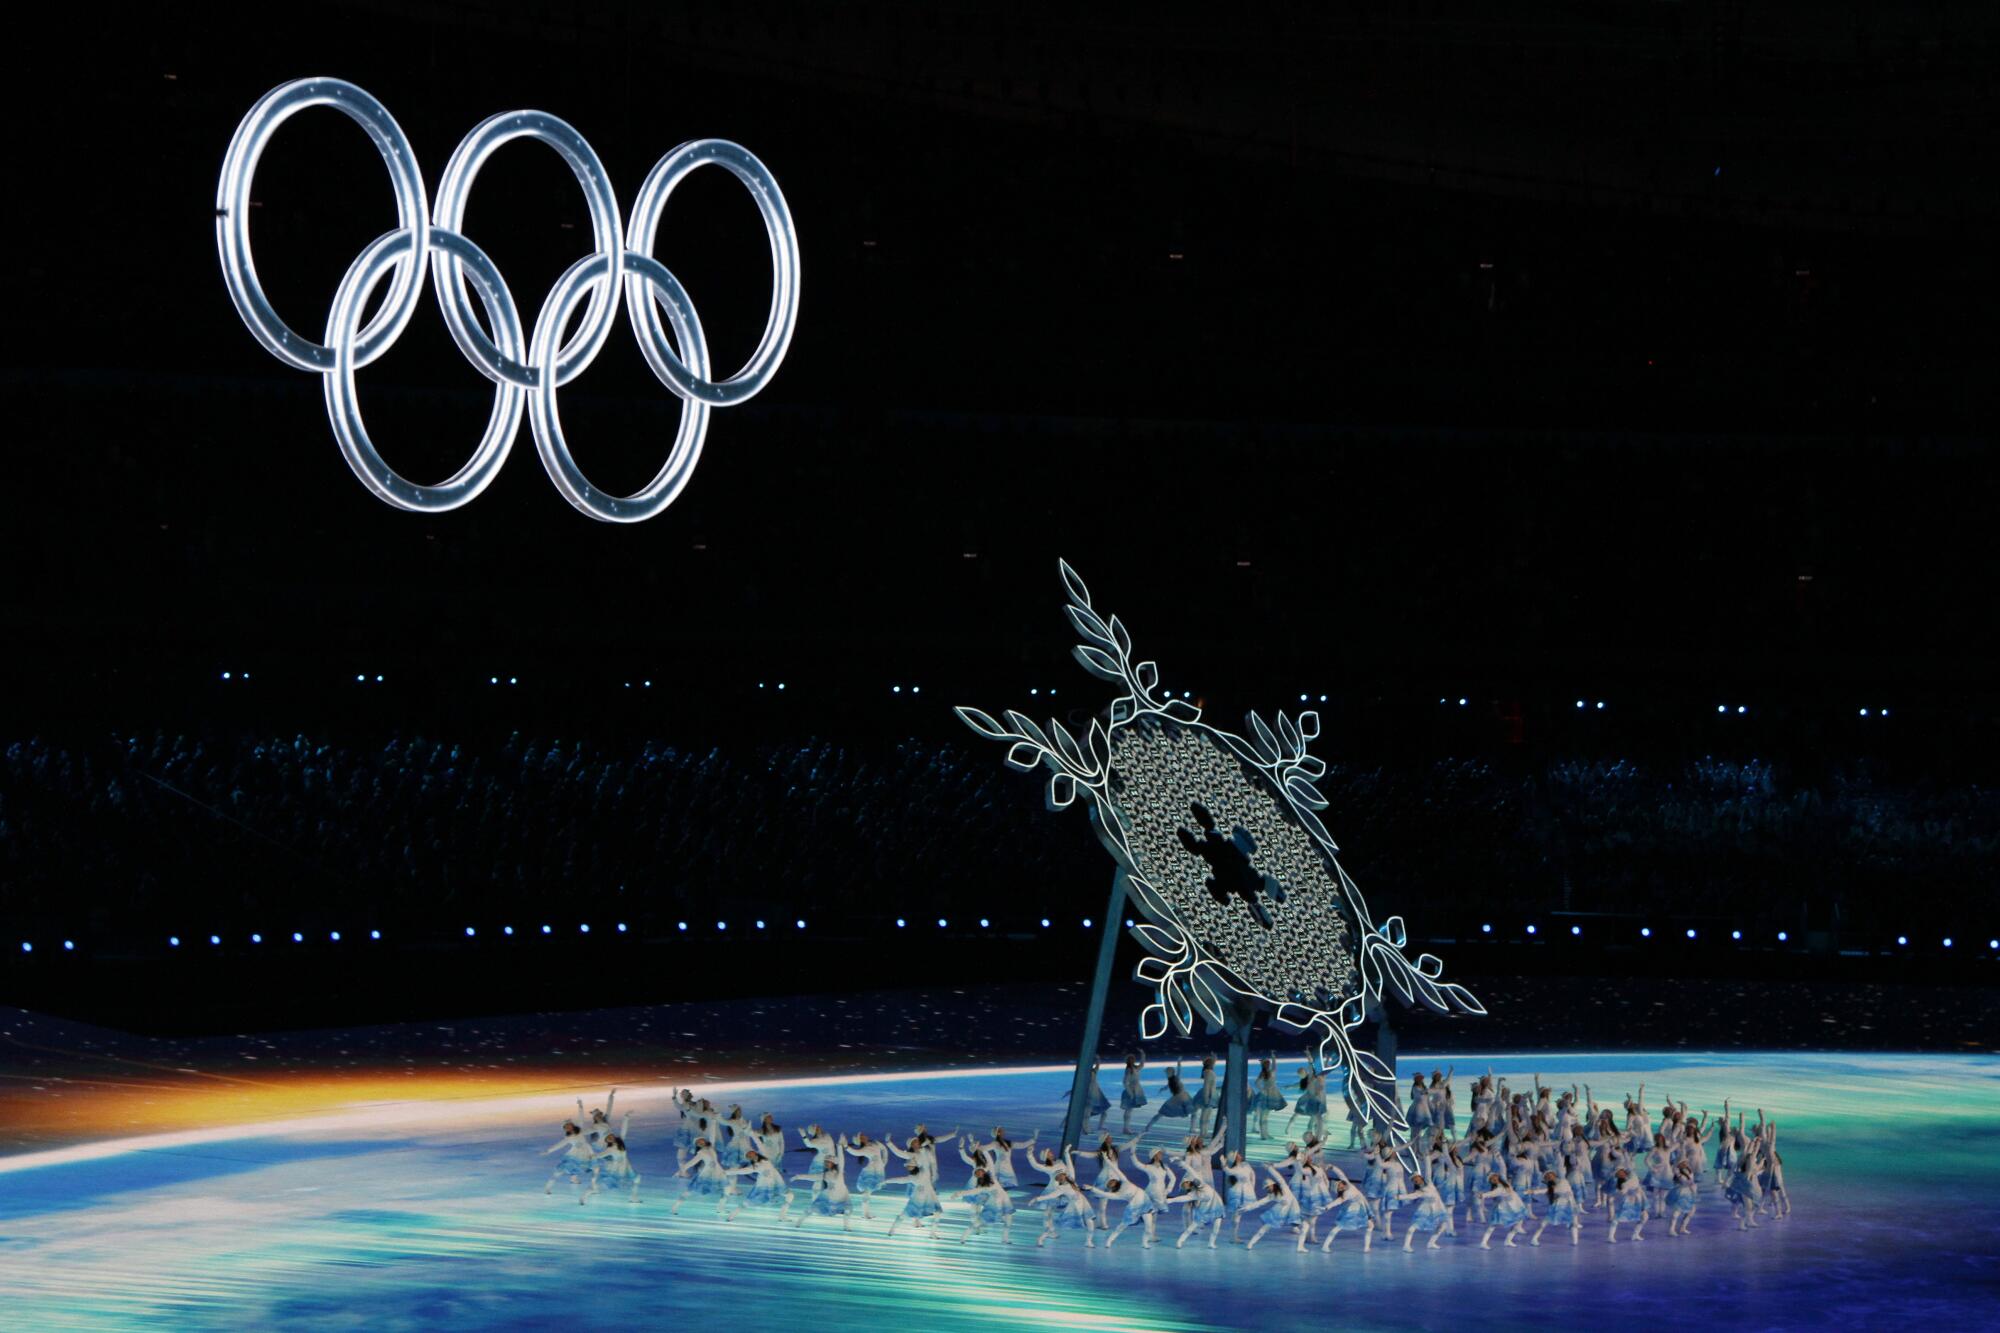 The Olympics Opening Ceremony